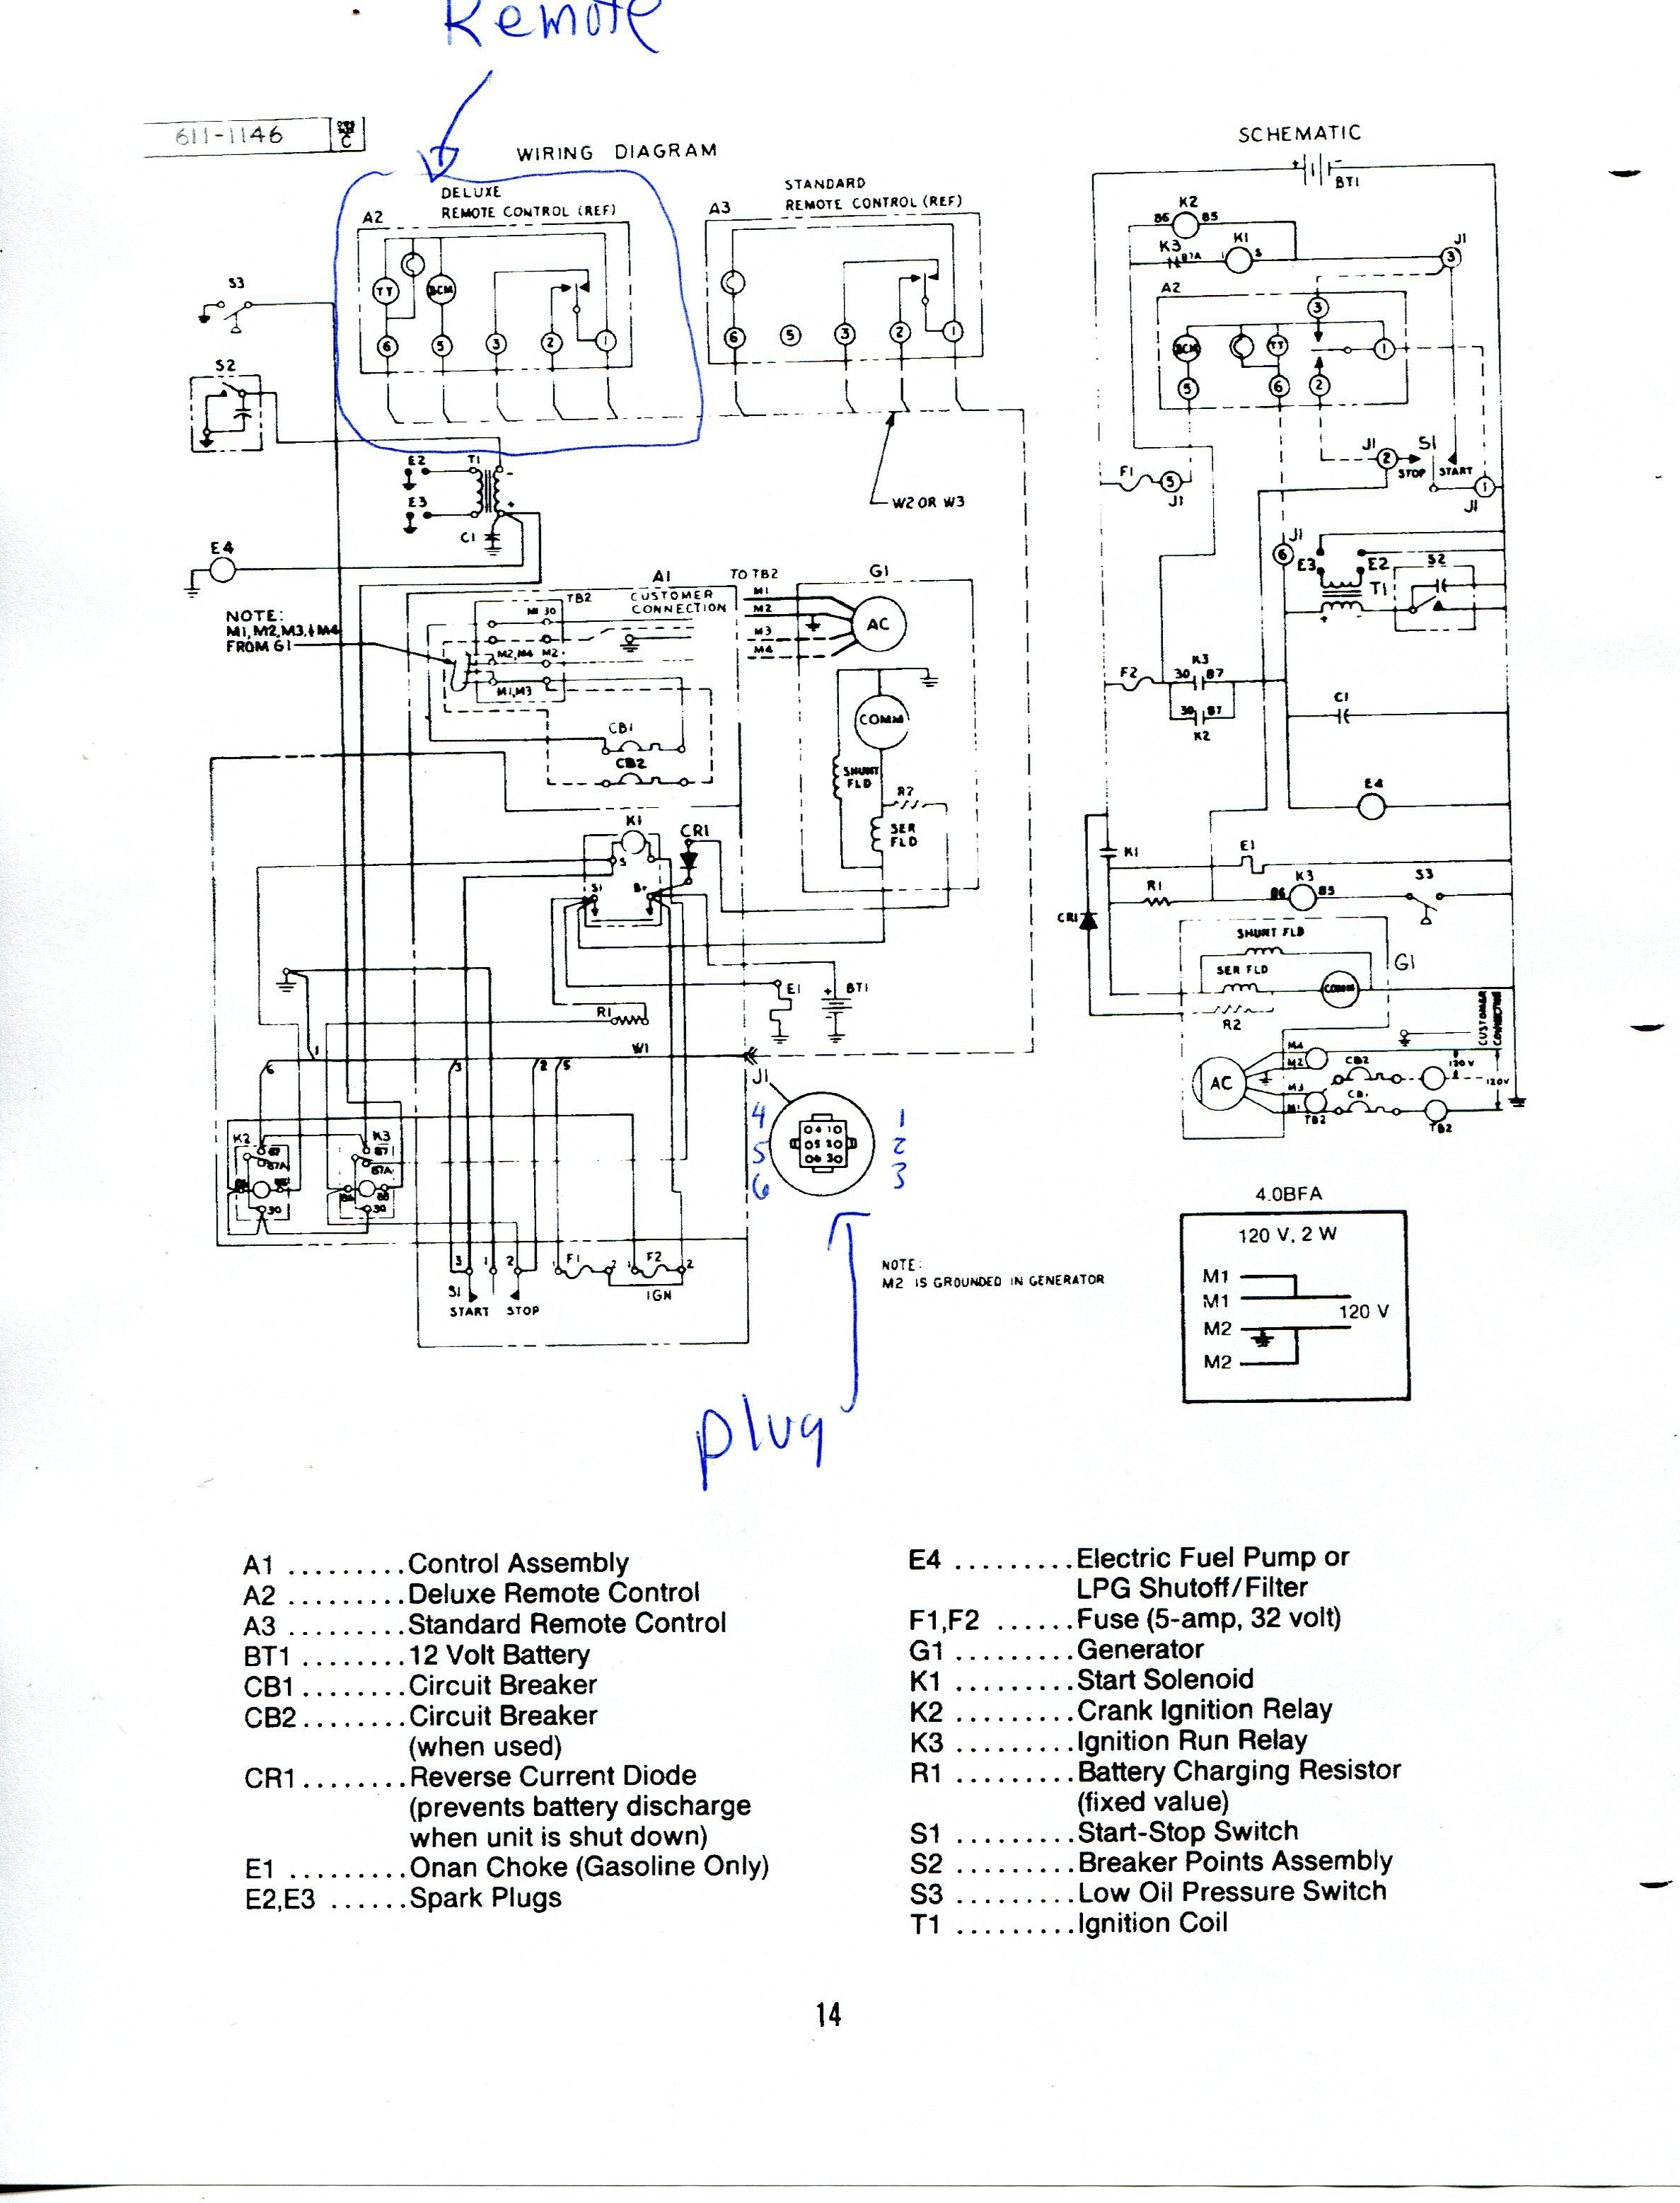 Wiring Diagram an Generator Valid Wiring Diagram An Generator Valid Luxury An Generator Electric